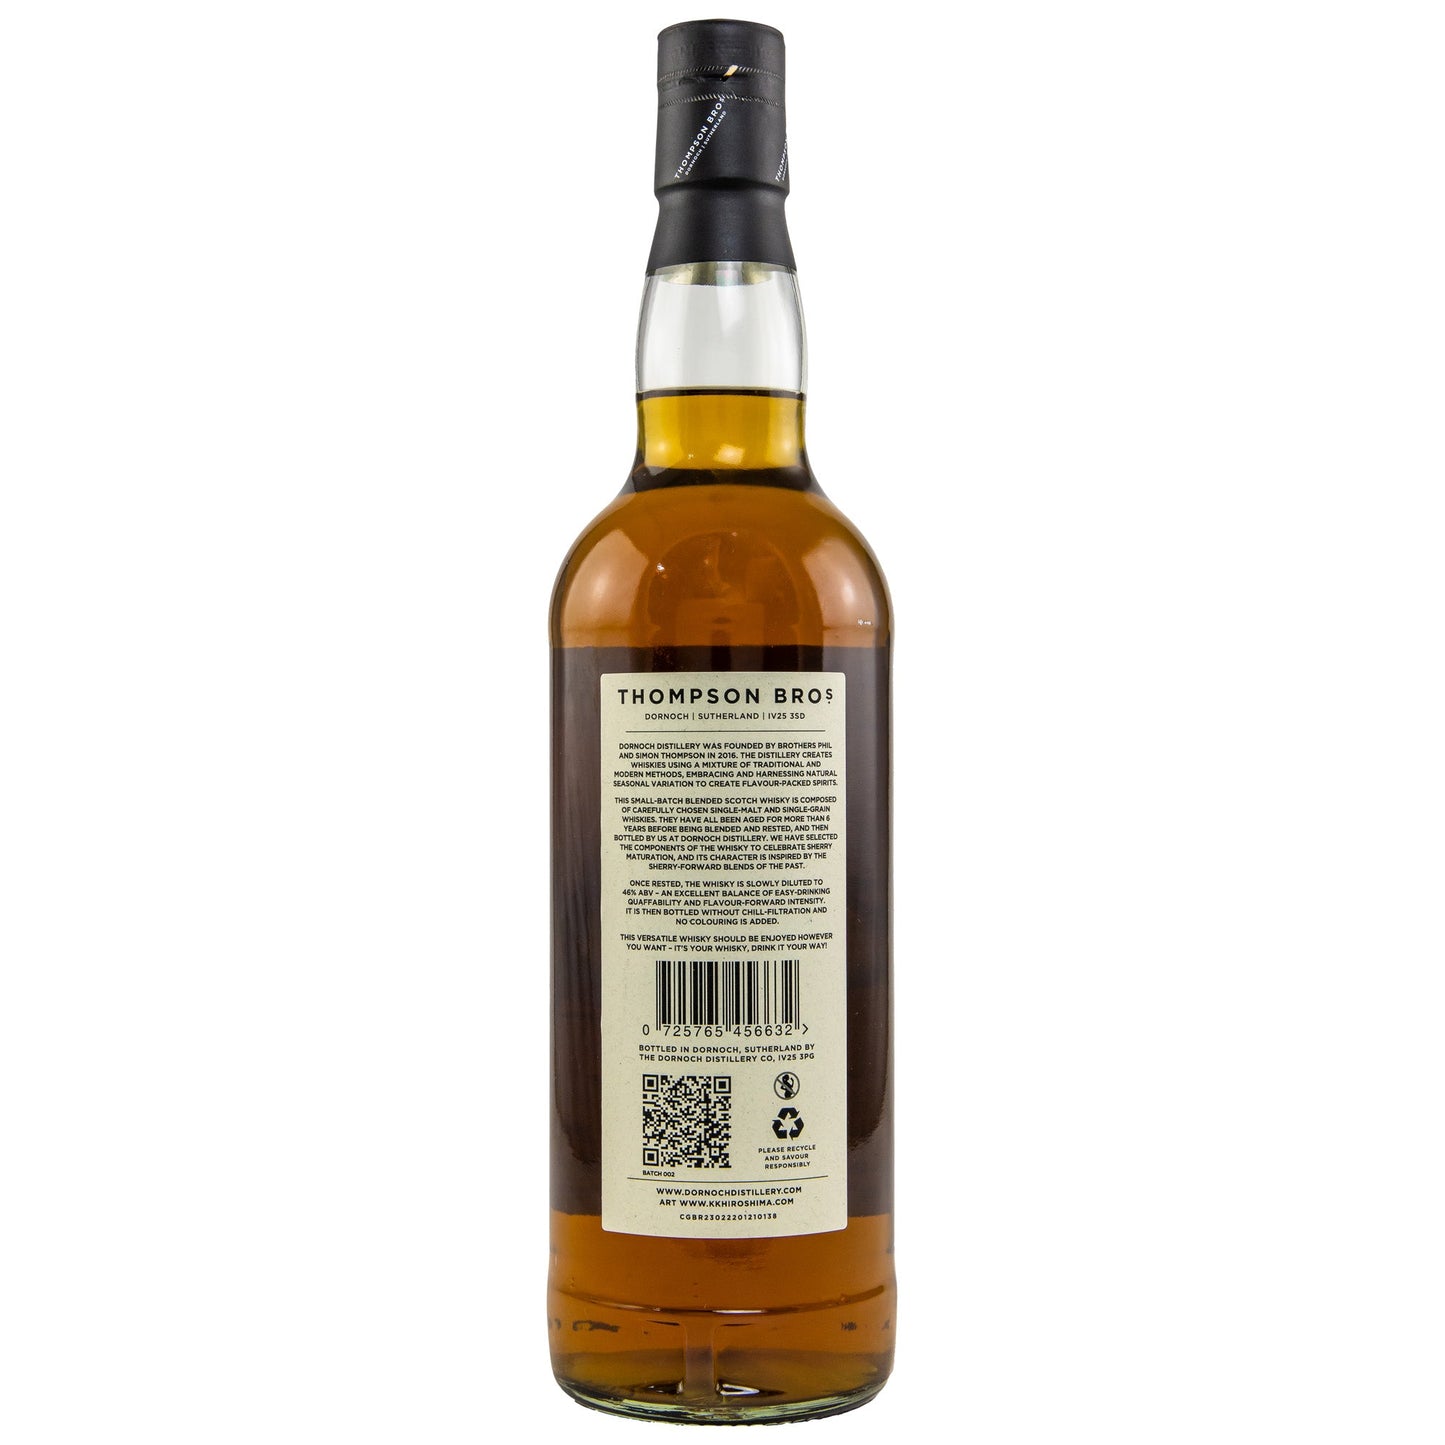 TB/BSW | 6 Jahre | Thompson Bros. | Blended Malt Scotch Whisky | 0,7l | 46%GET A BOTTLE